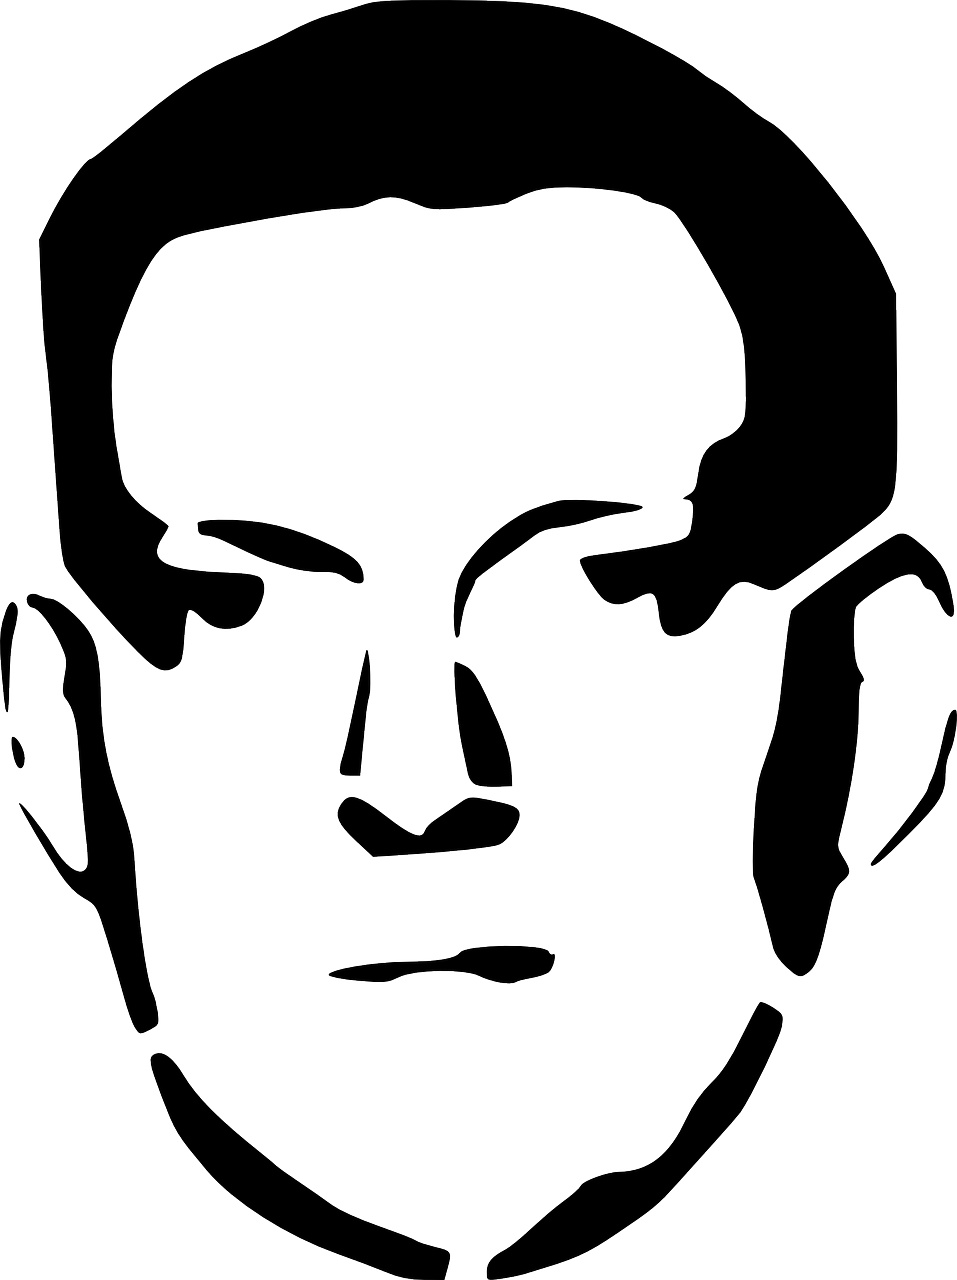 Face outline. Лицо svg. Логотип лицо. Логотип с лицом человека. Лицо СВГ.